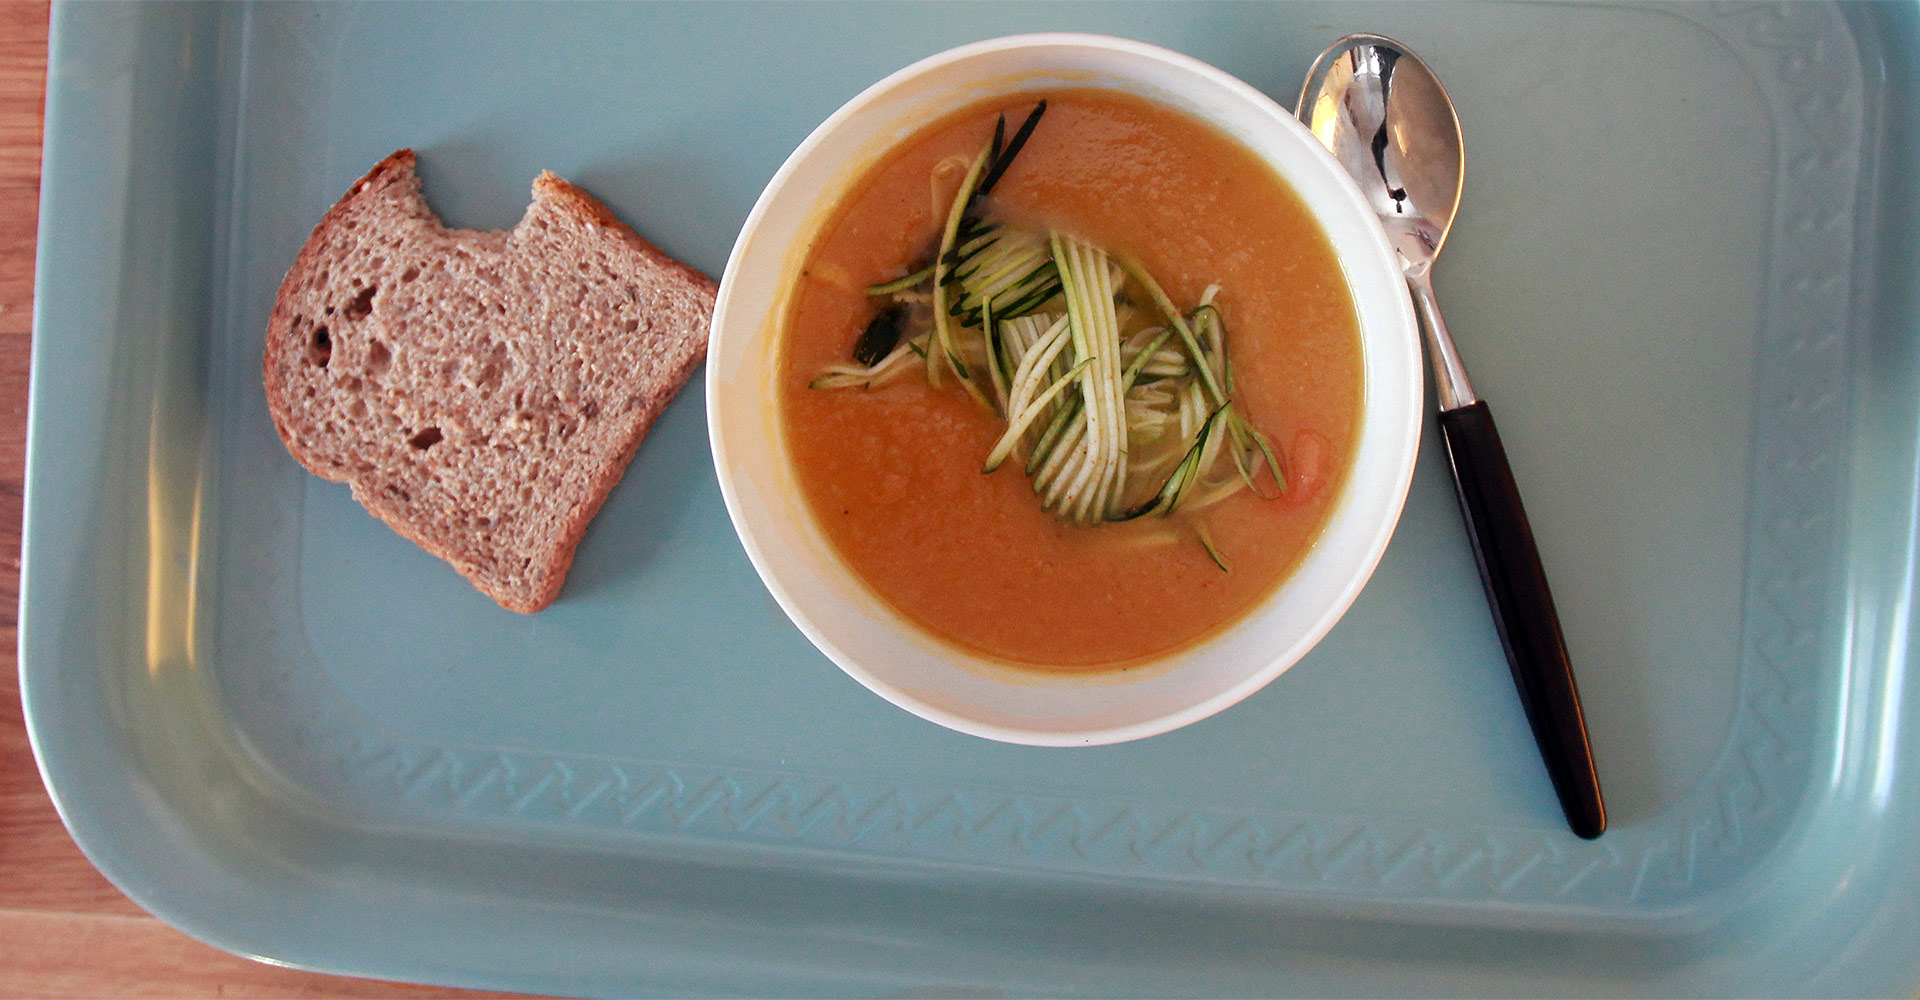 picutre of a bowl of soup